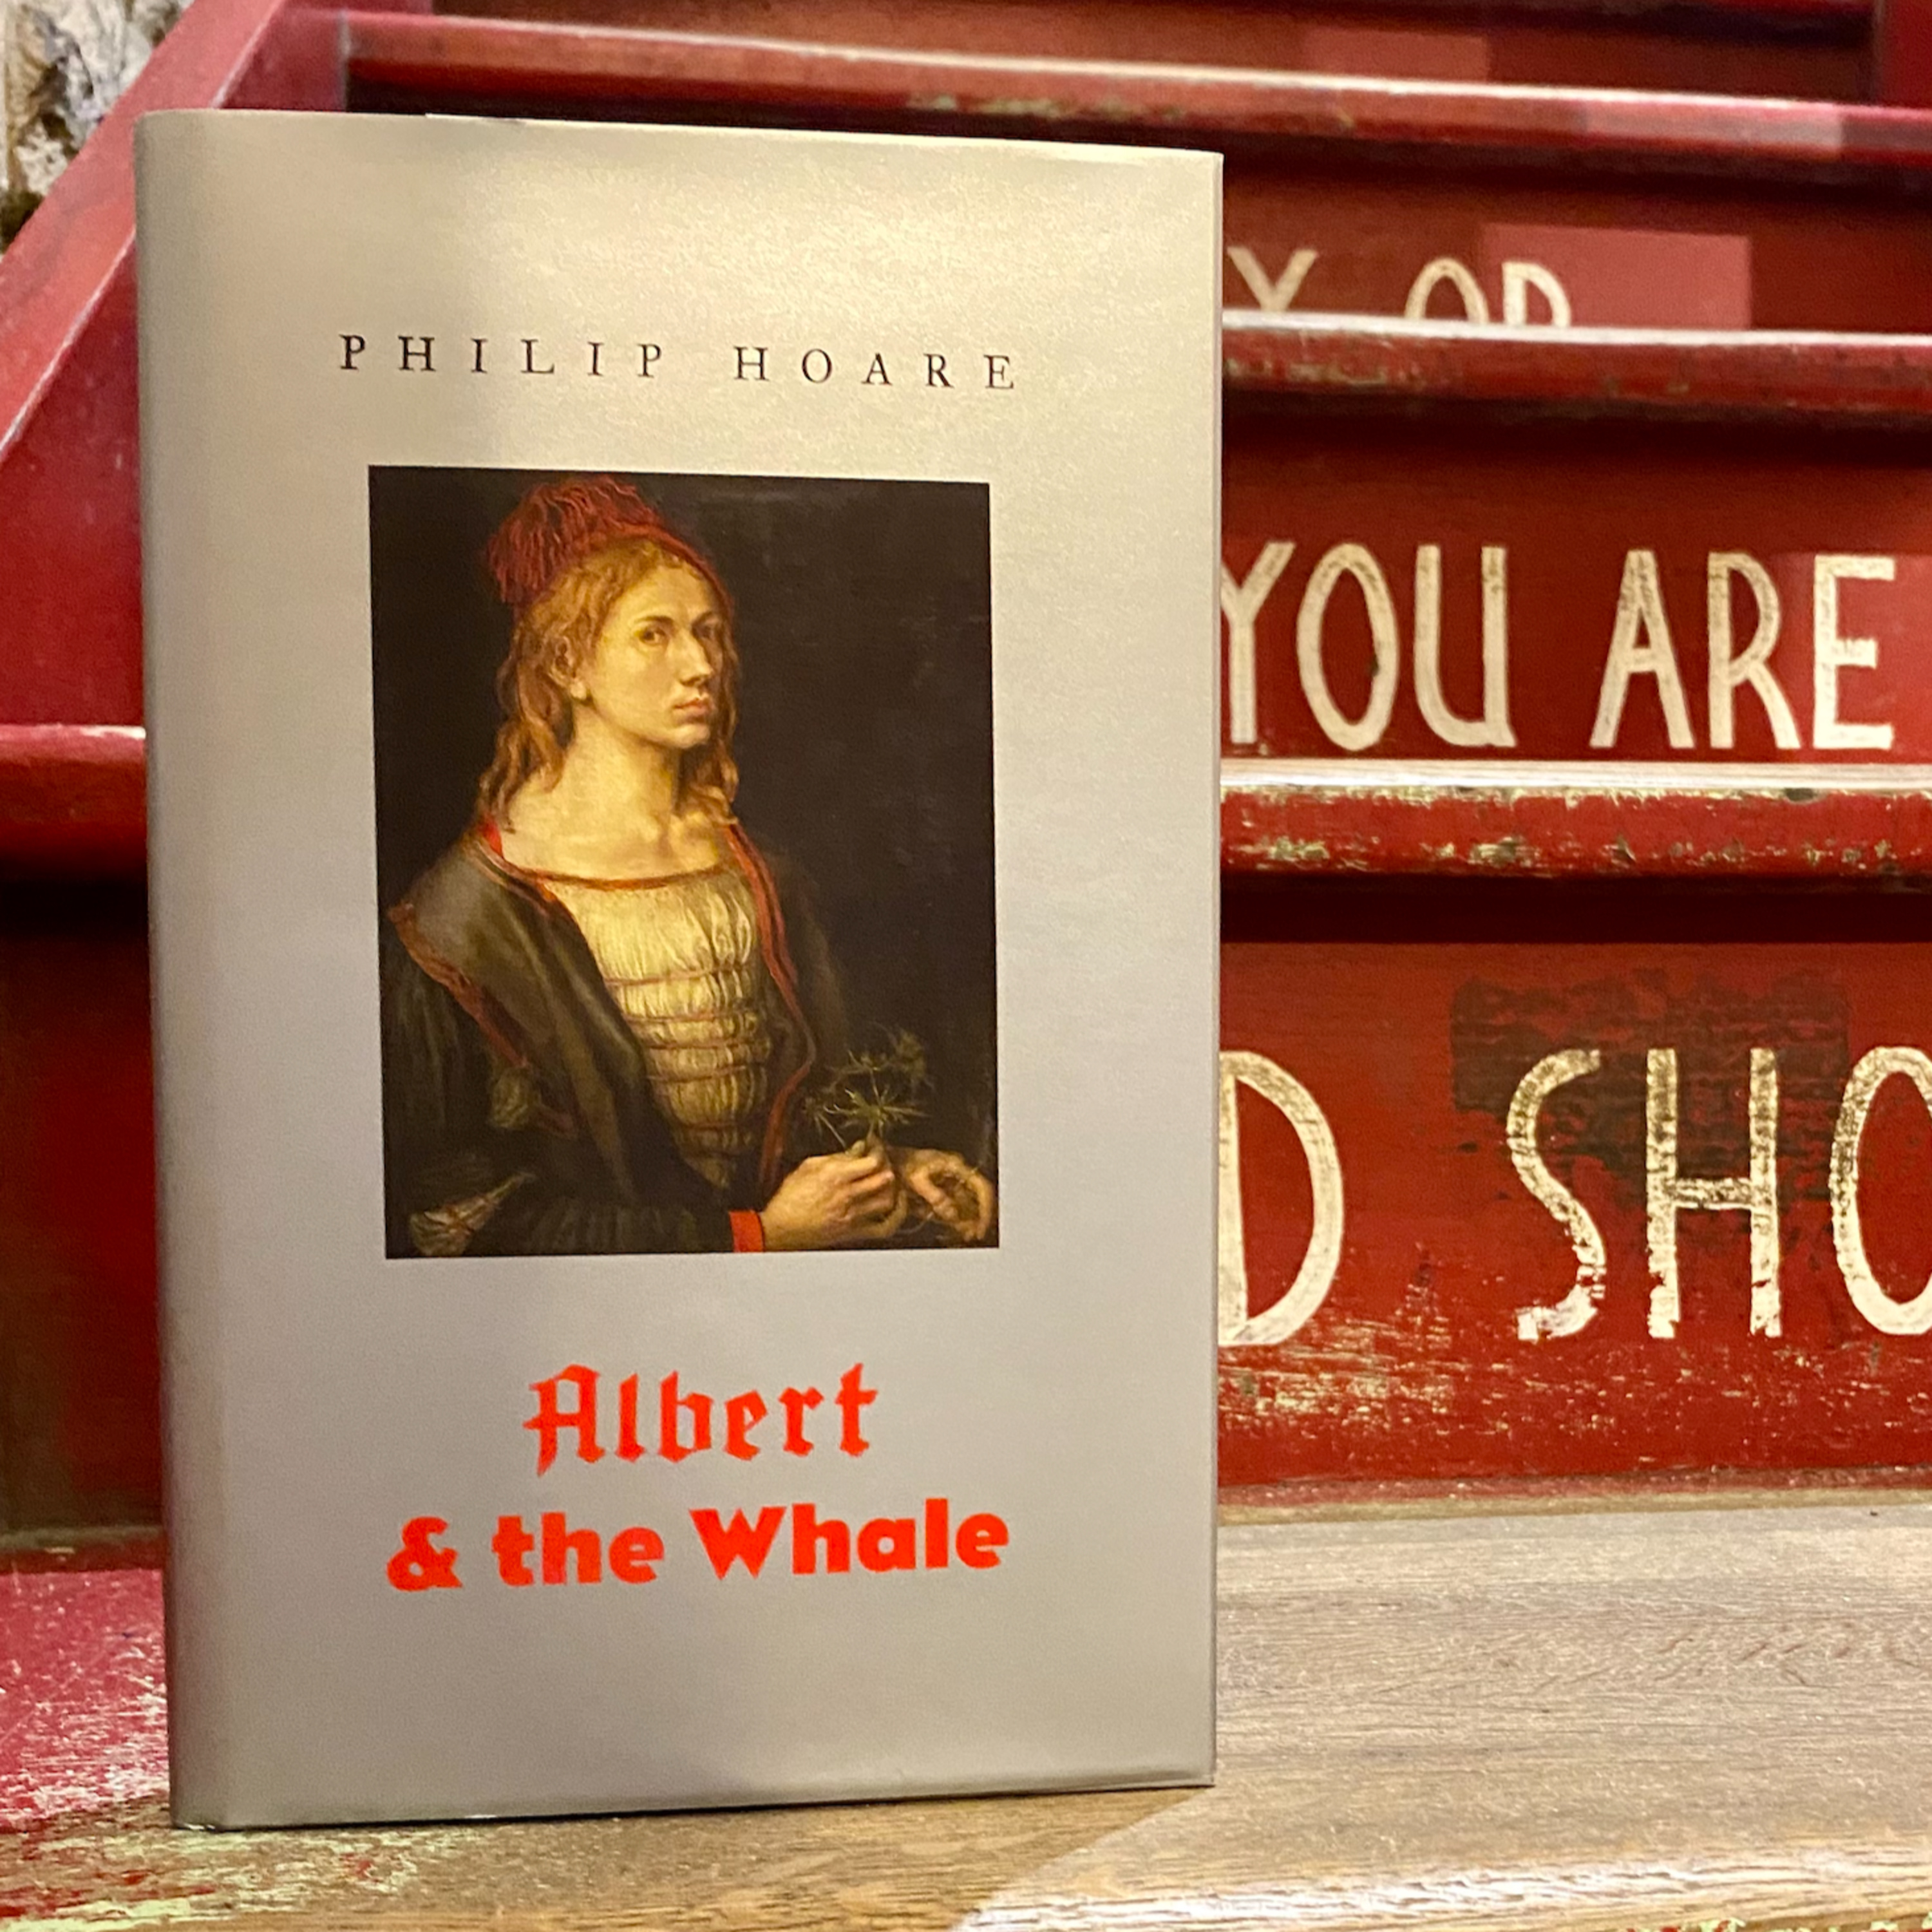 Philip Hoare on Albert & the Whale